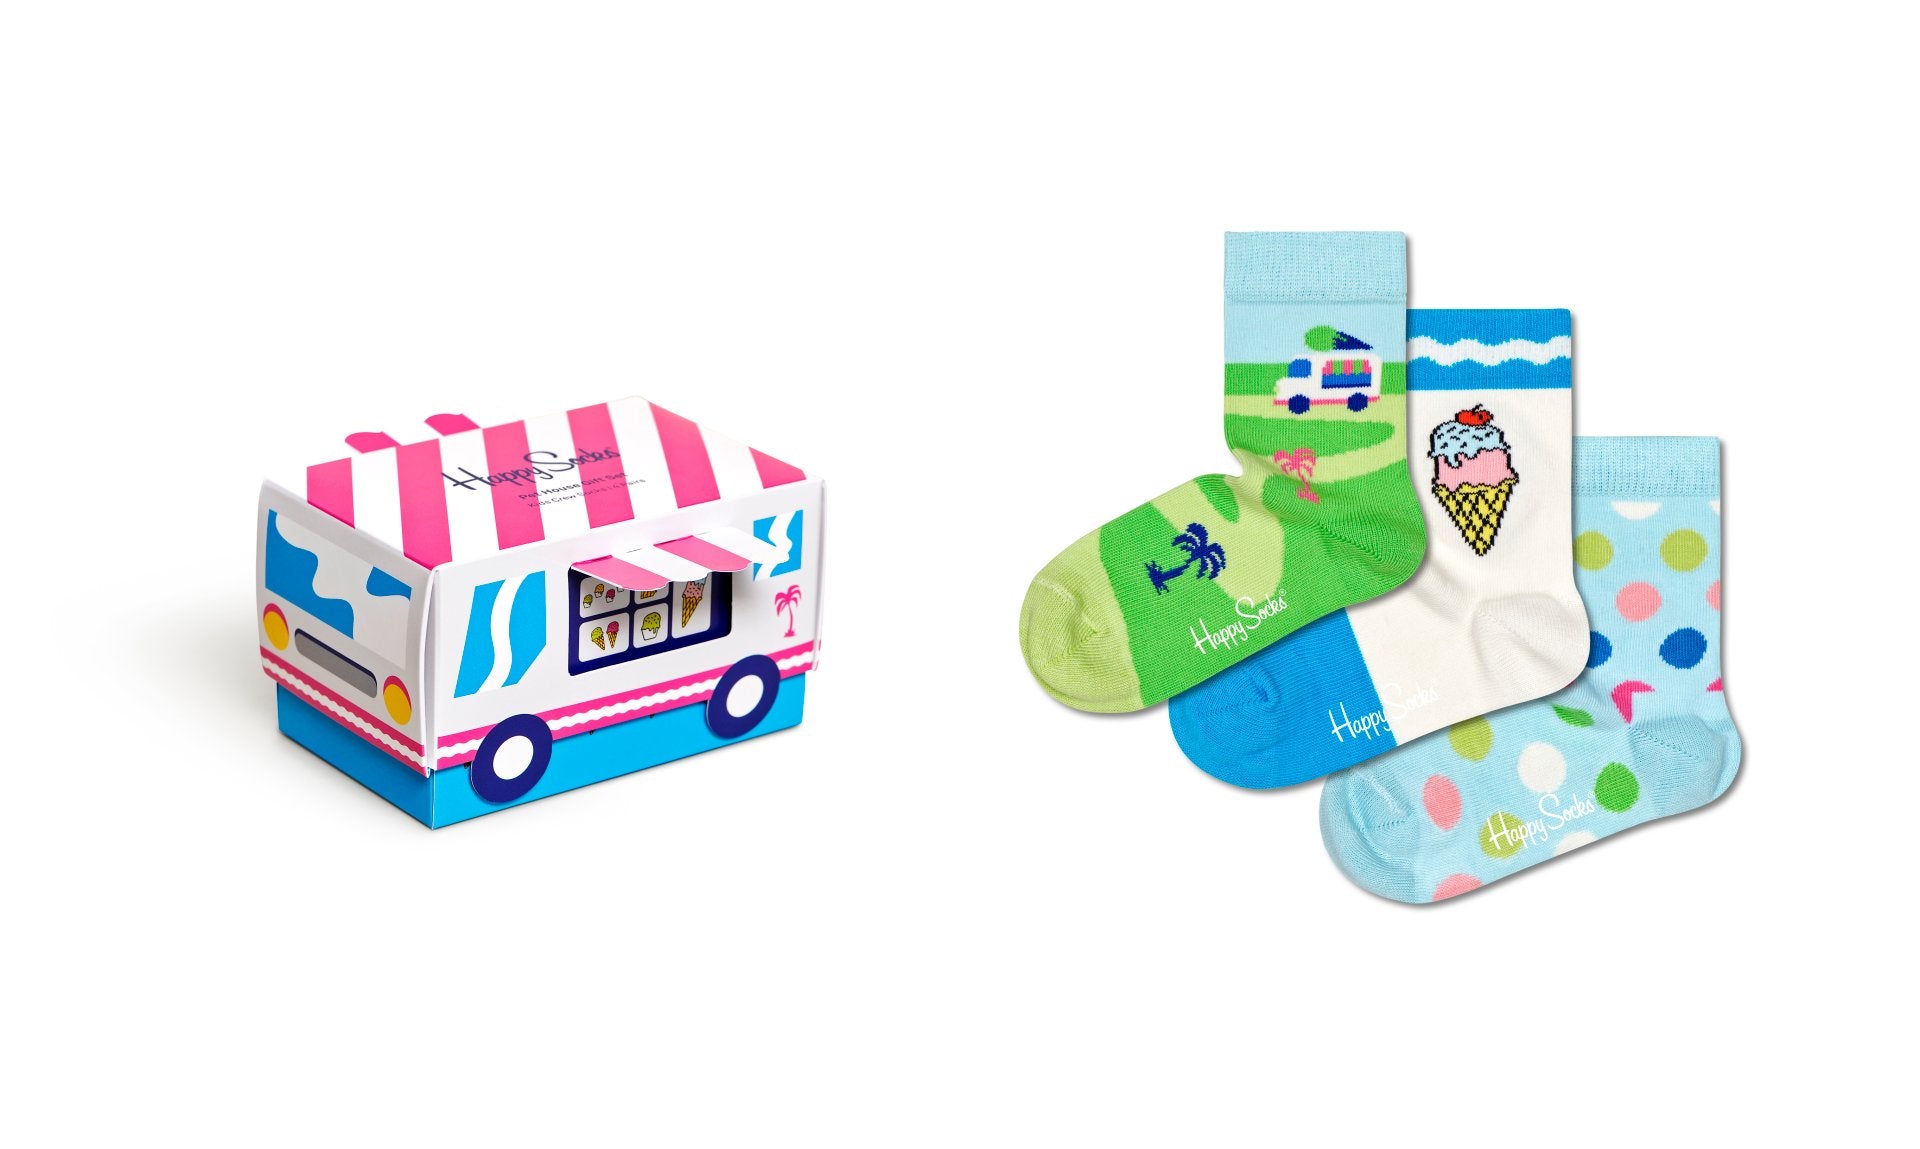 Kids Ice Cream Sock Gift Set- 3pk by Happy Socks